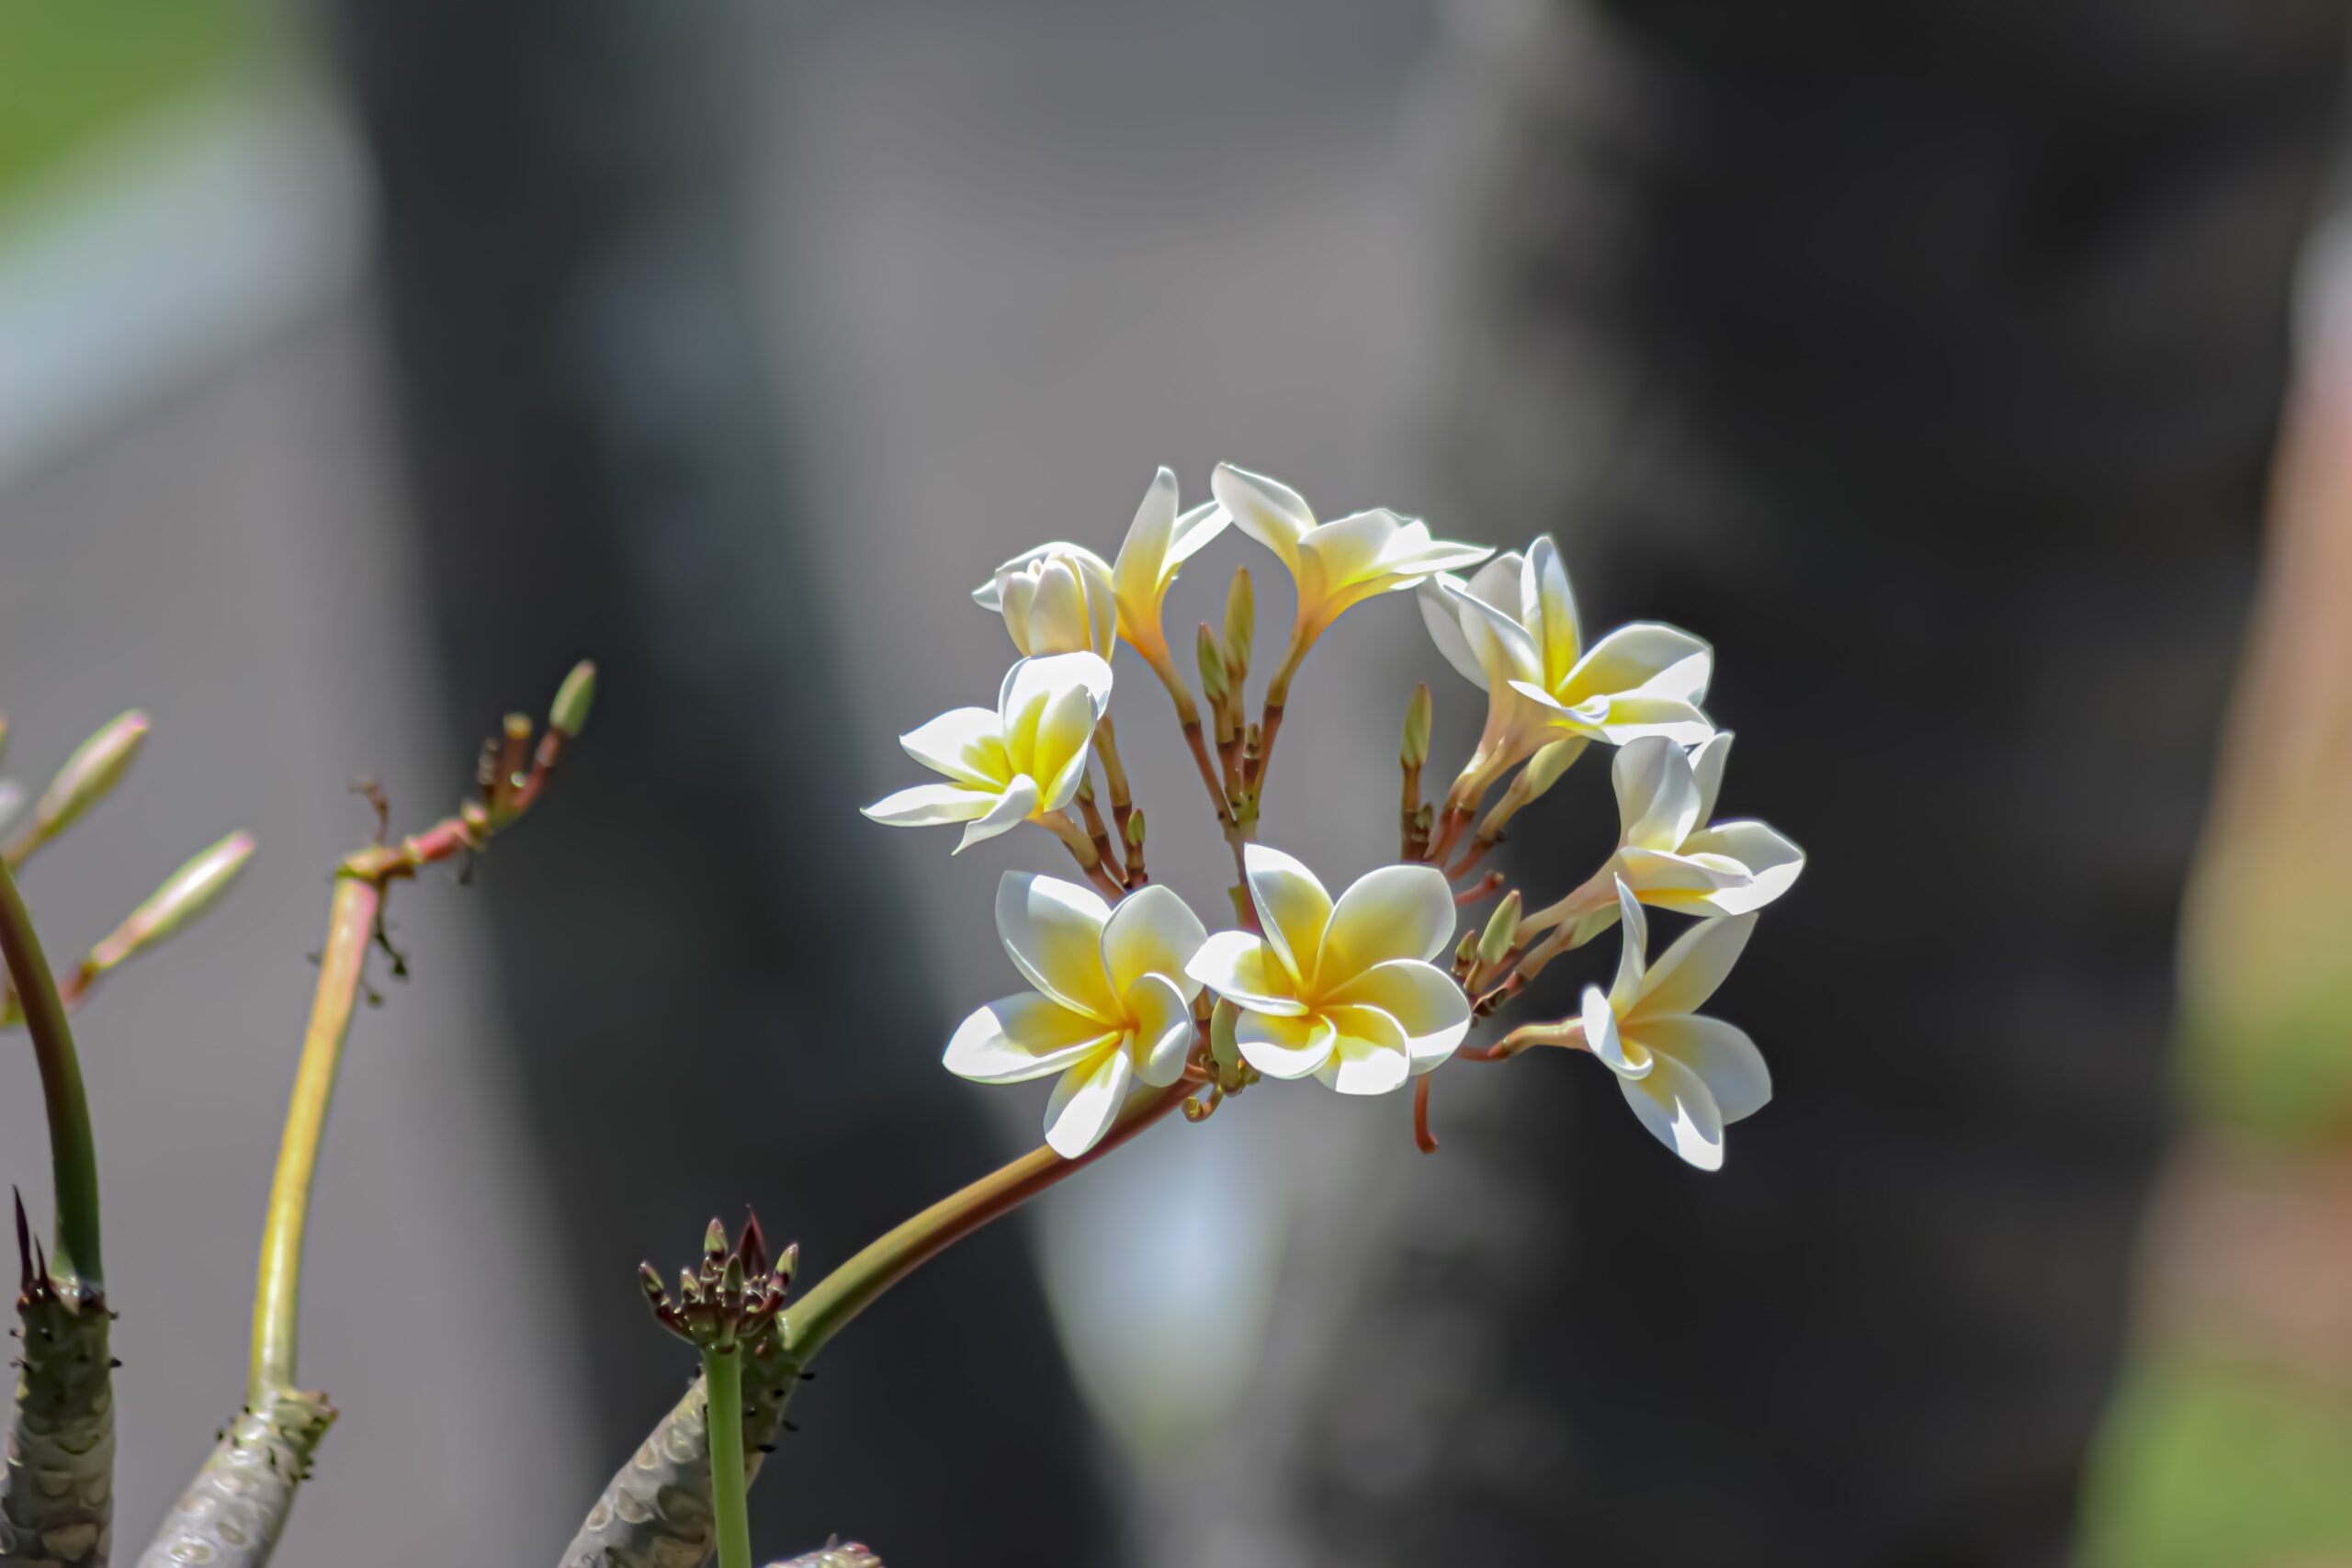 White and yellow frangipani or plumeria flowers on a tree